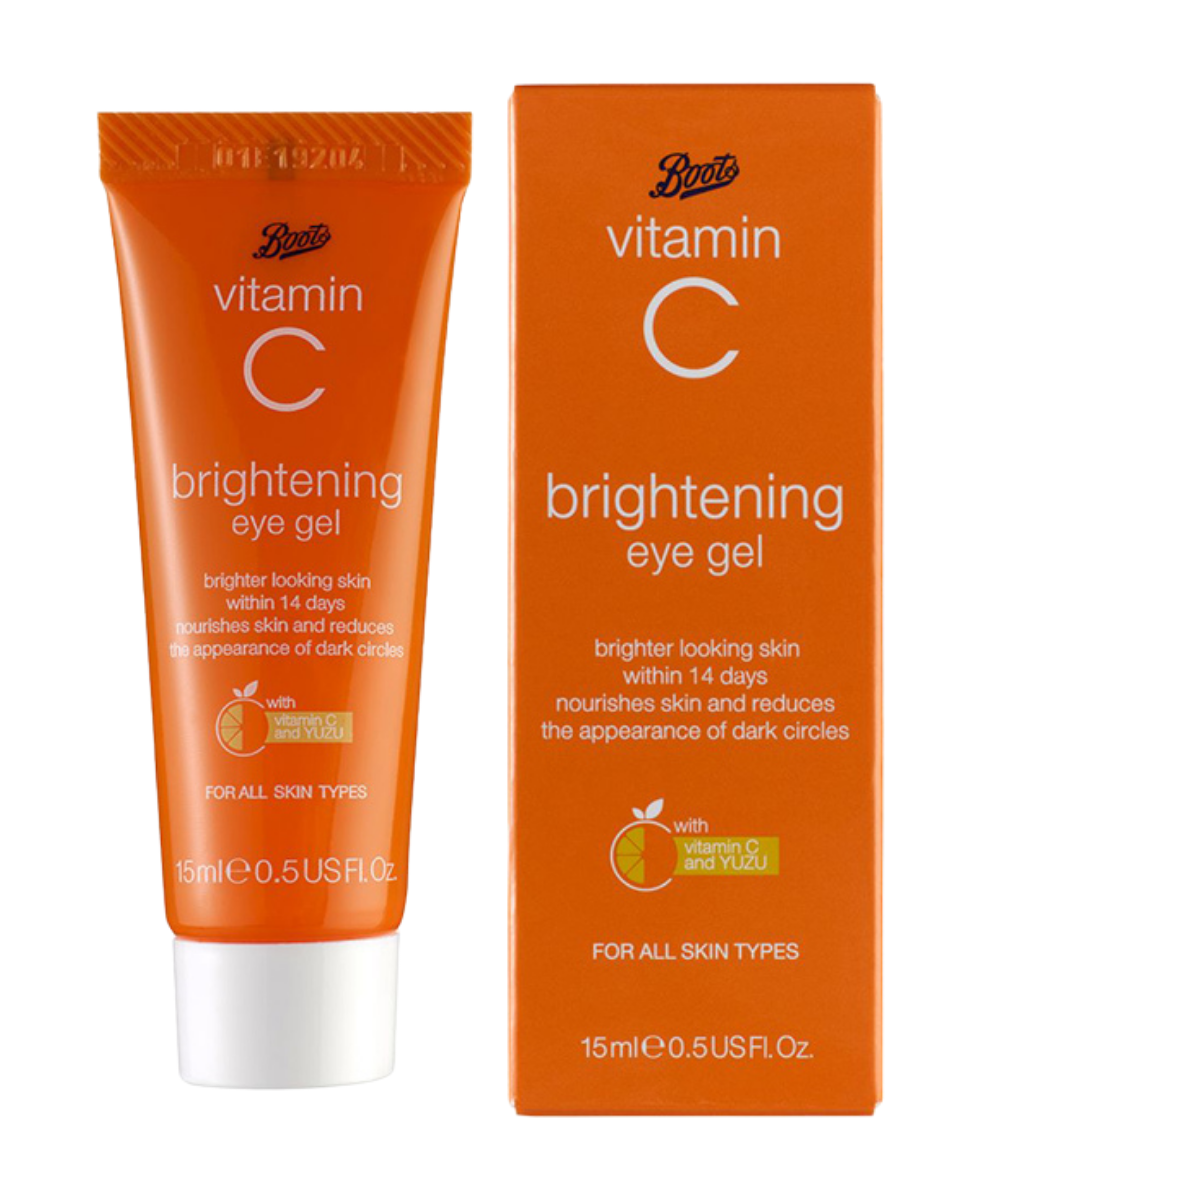 Boots Vitamin C Brightening Eye Gel 15 Ml - Highfy.pk